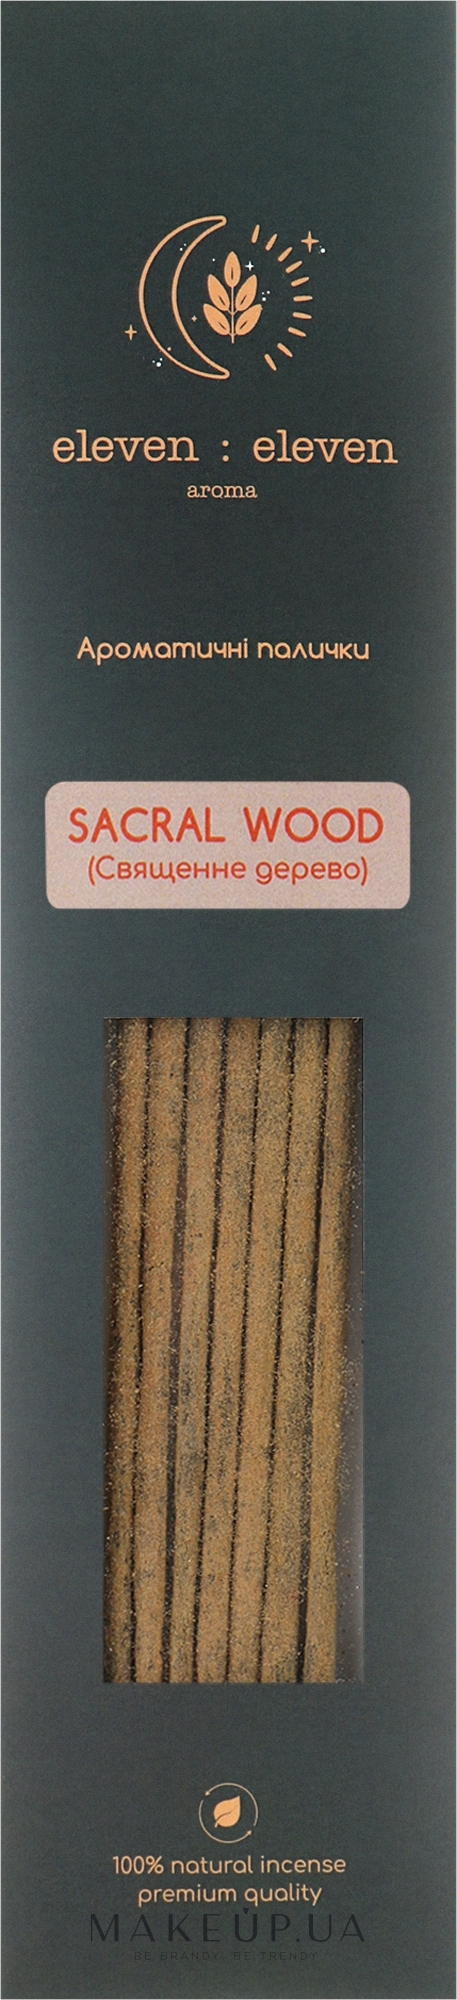 Аромапалочки "Священное дерево" - Eleven Eleven Aroma Sacral Wood Aroma Sticks — фото 10шт